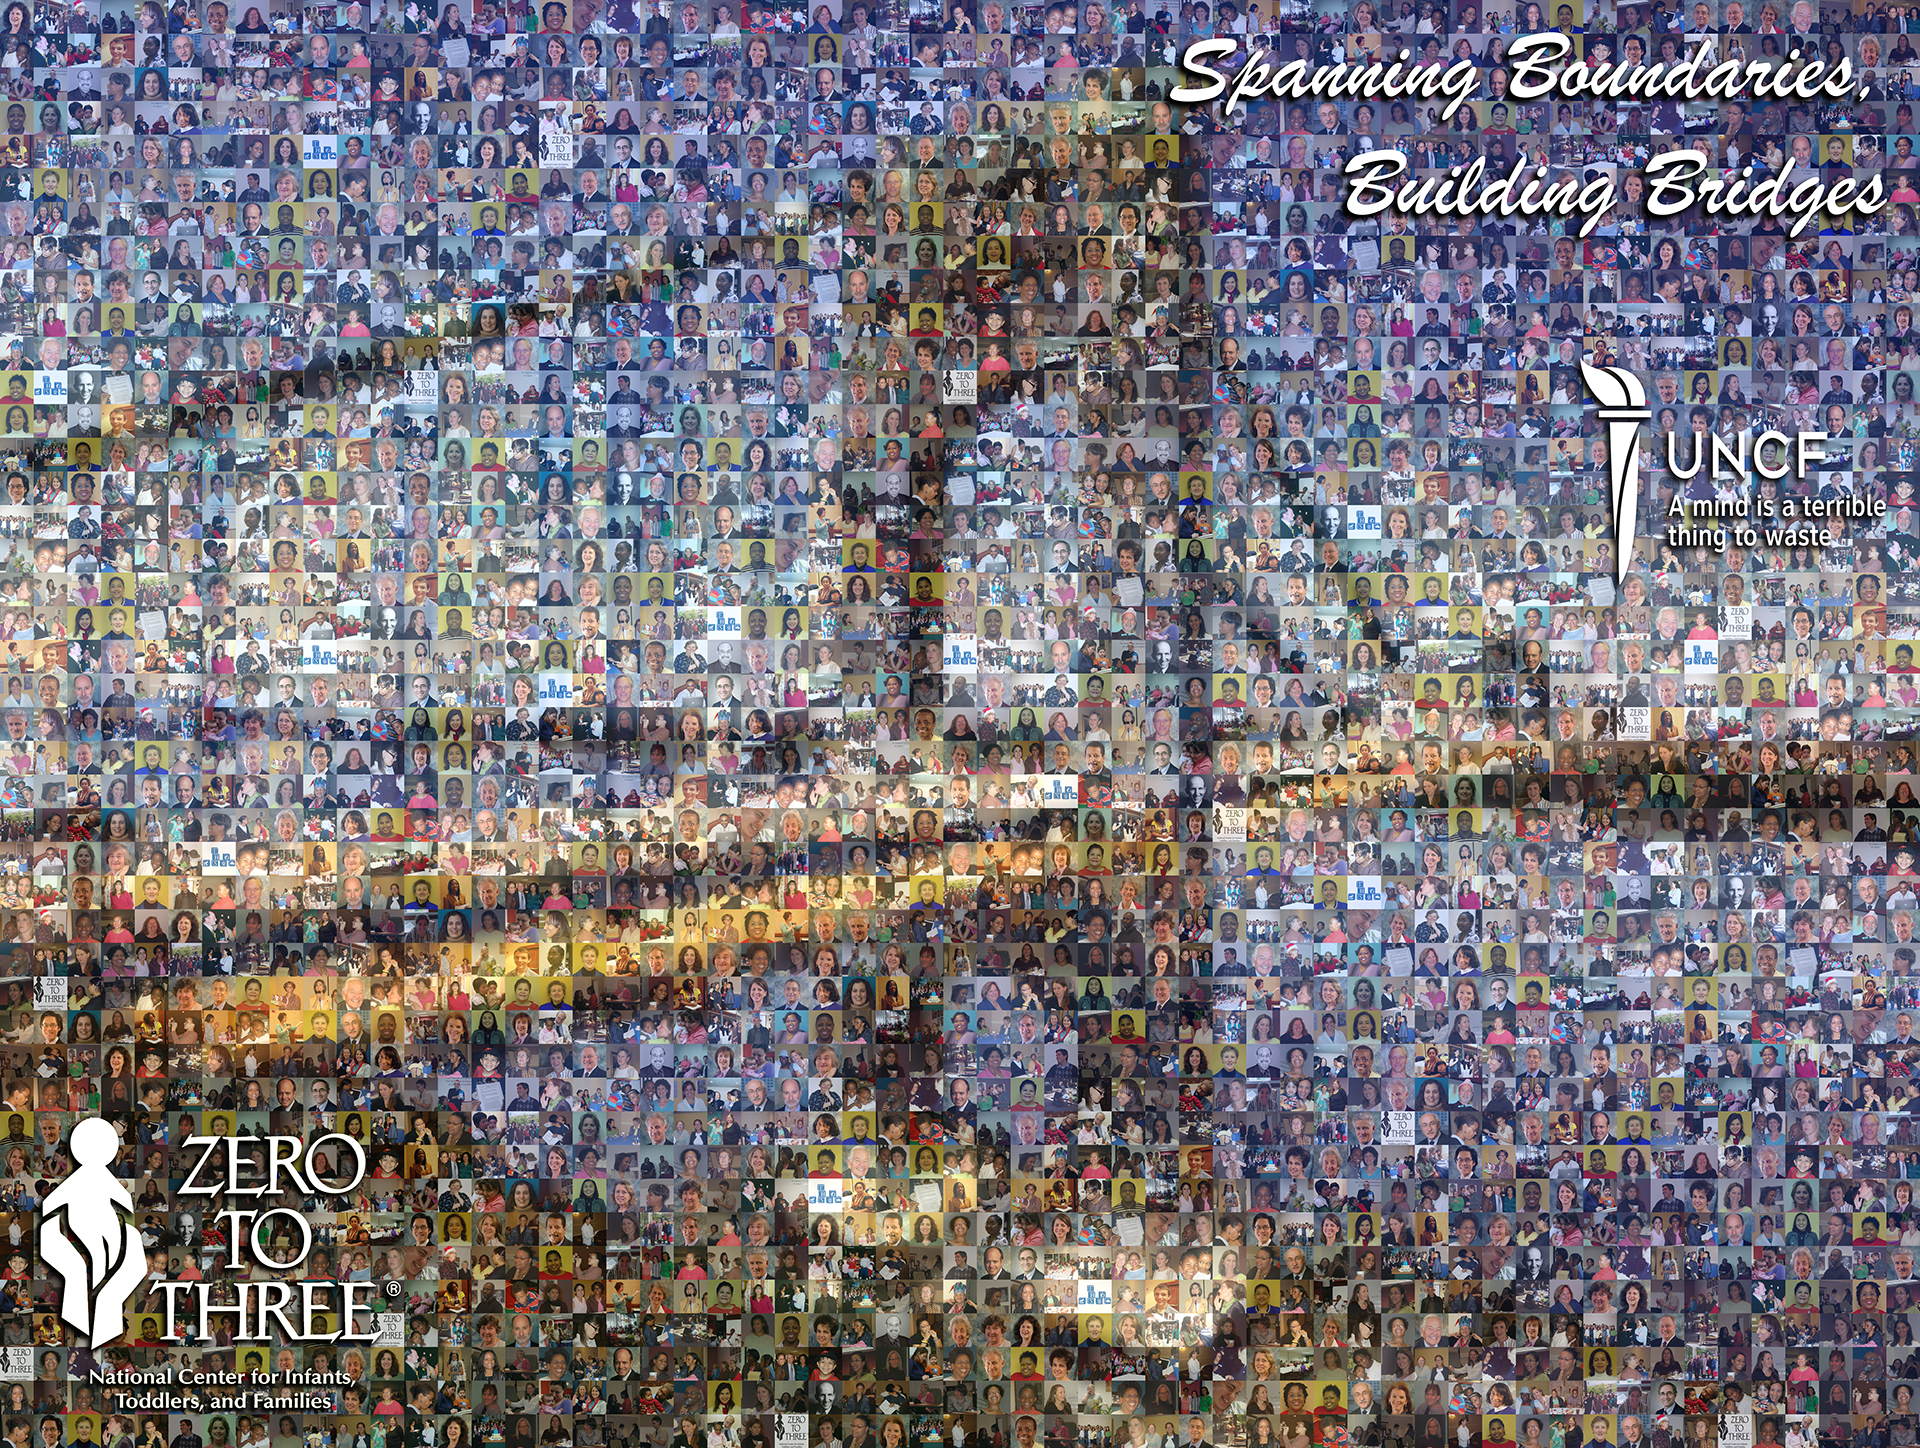 photo mosaic created using 190 employee photos